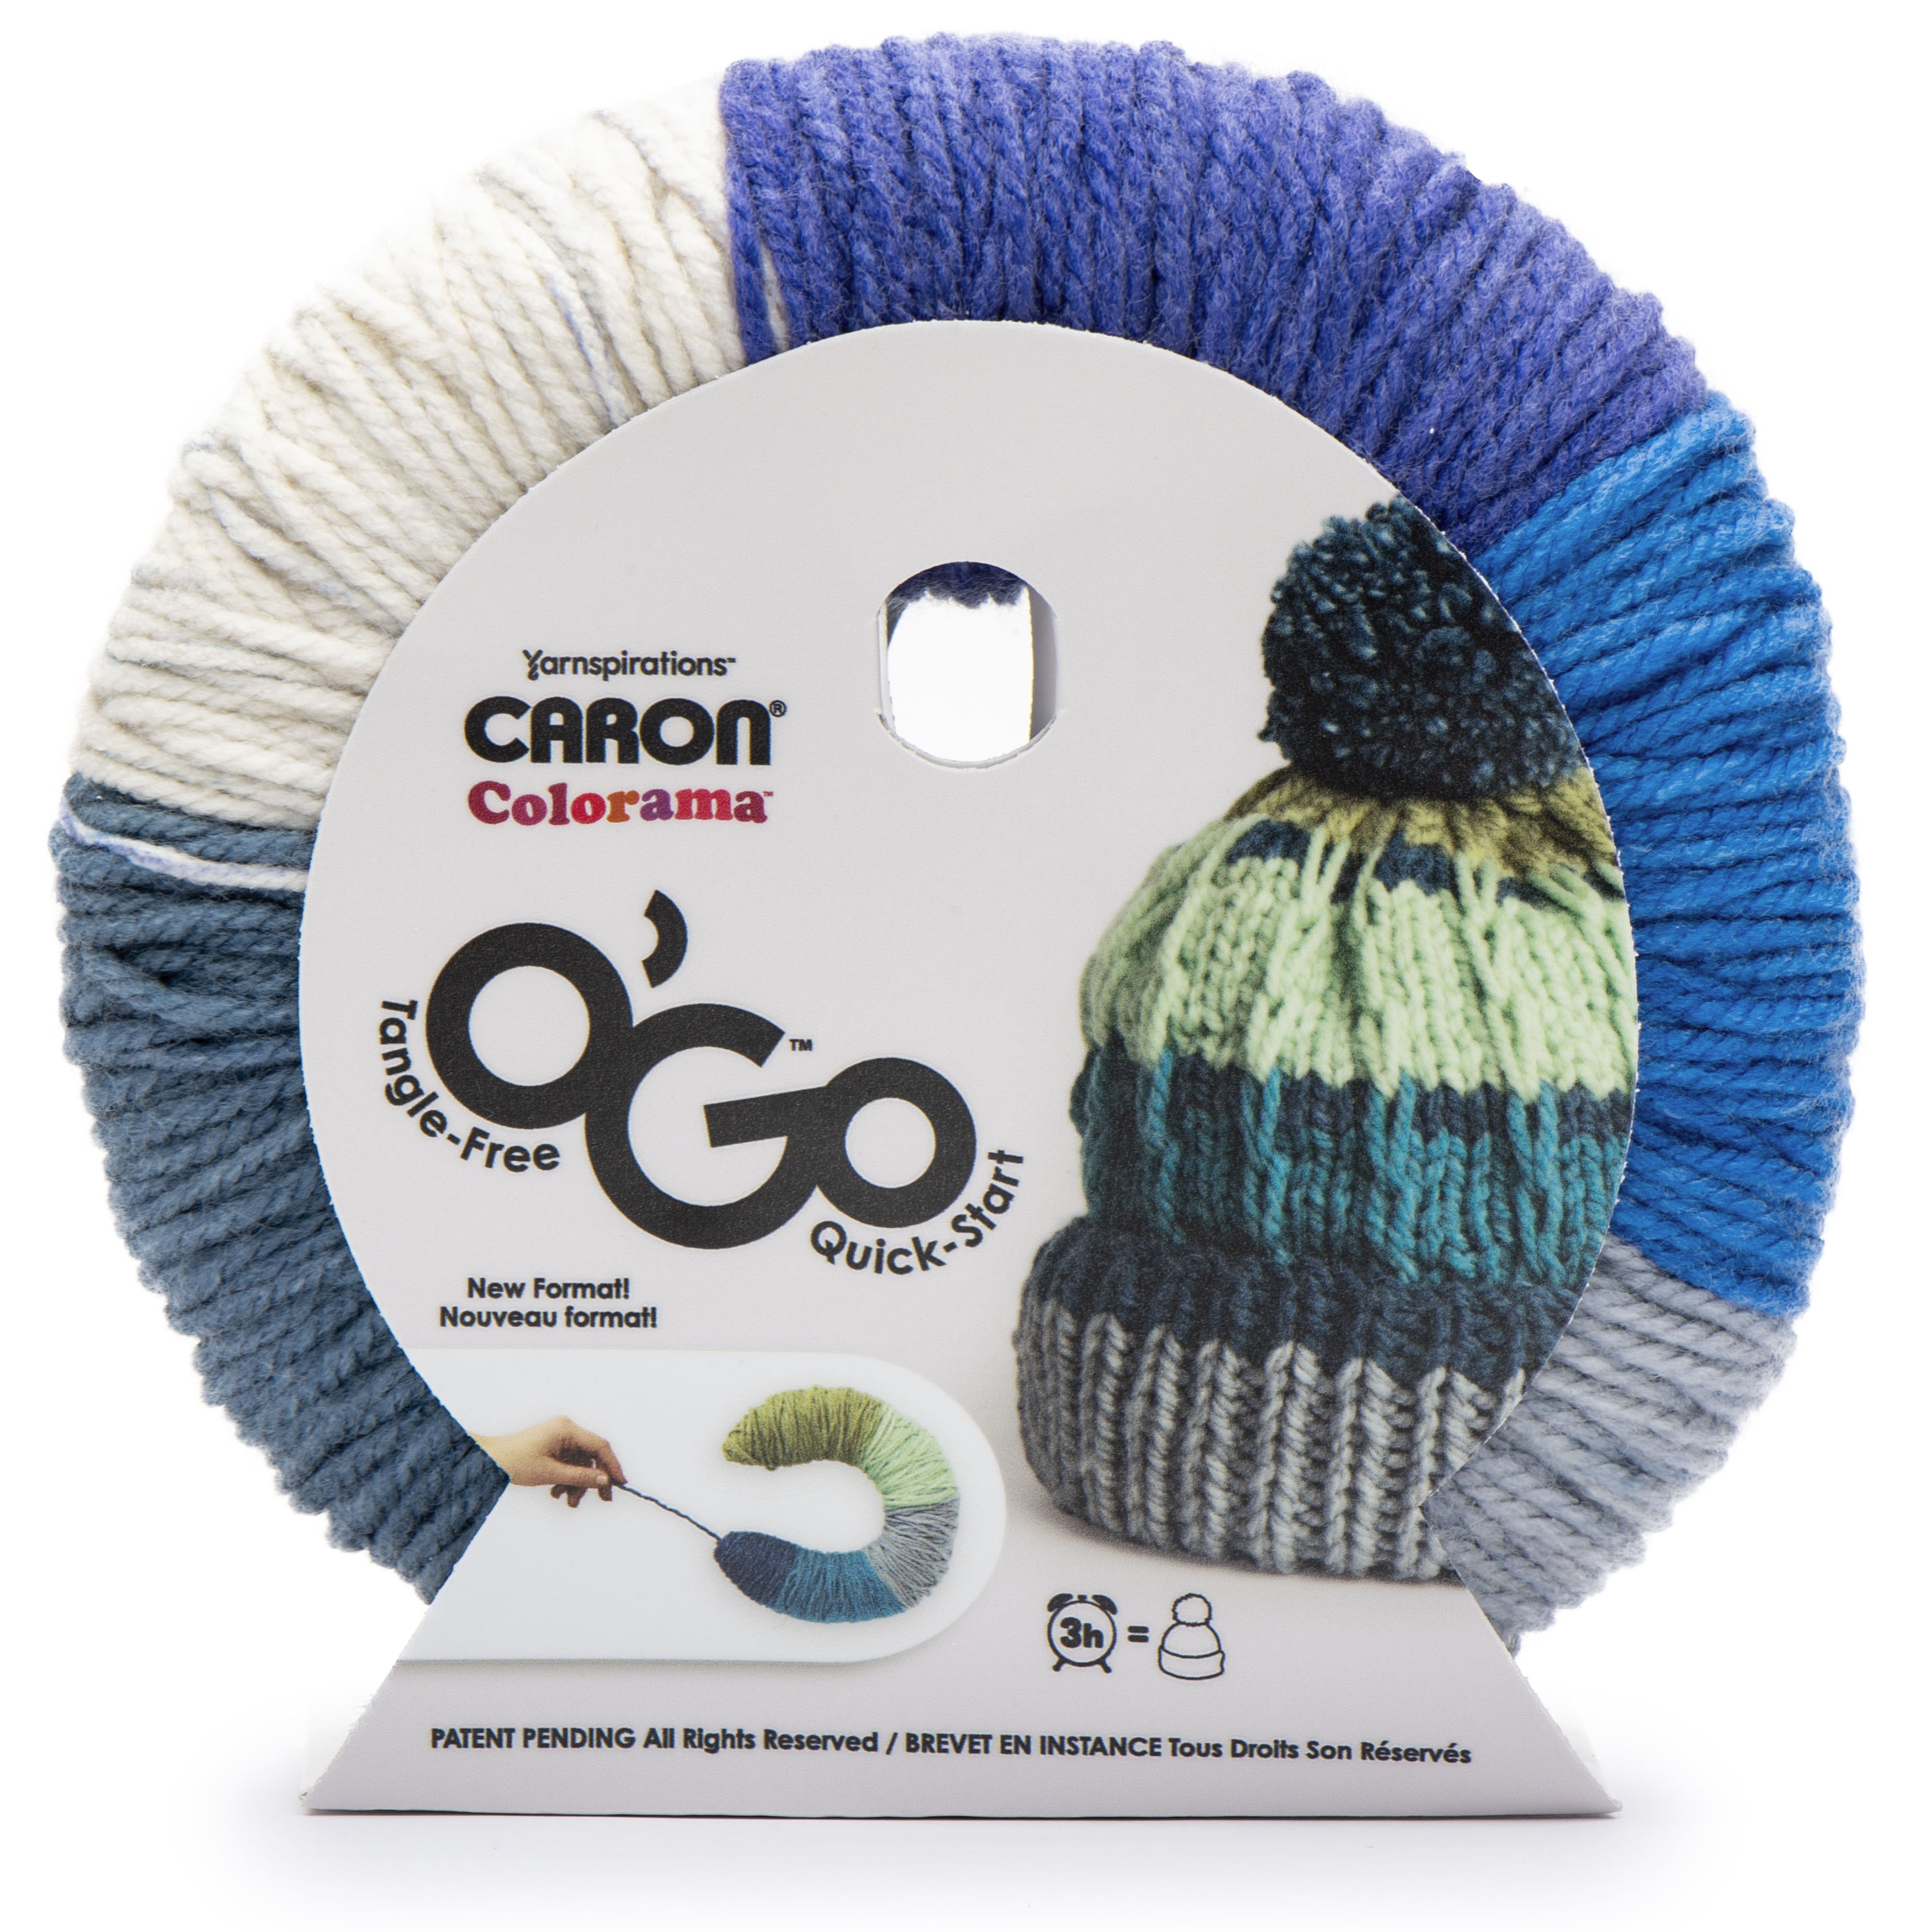 Chunky Cakes Yarn by Caron - Multicolor Yarn for Knitting, Crochet